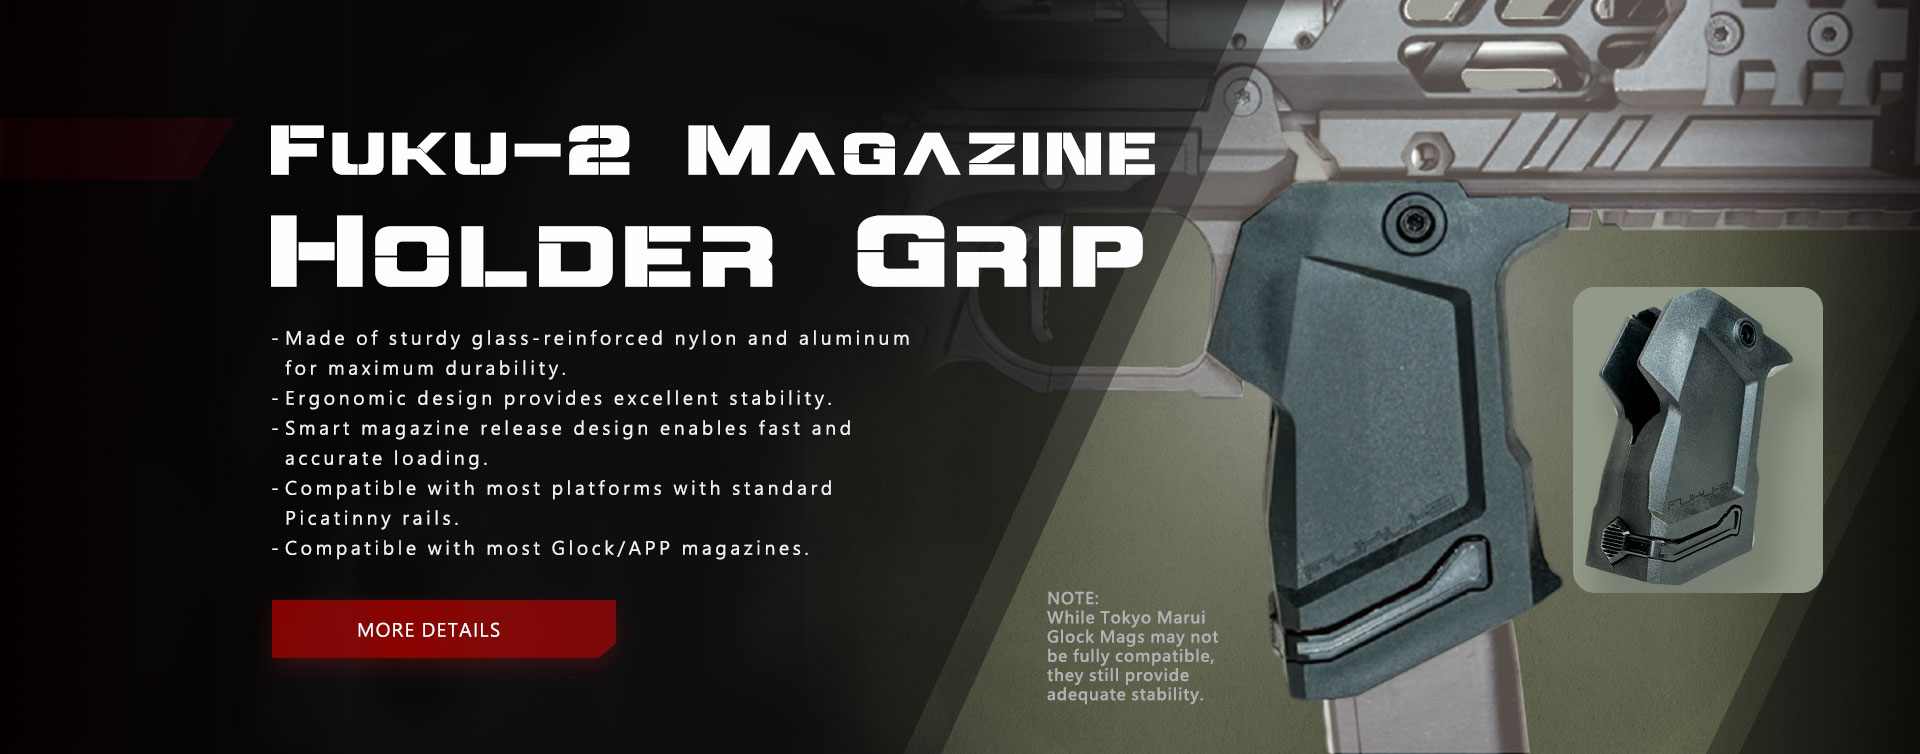 Fuku-2 Magazine Holder Grip